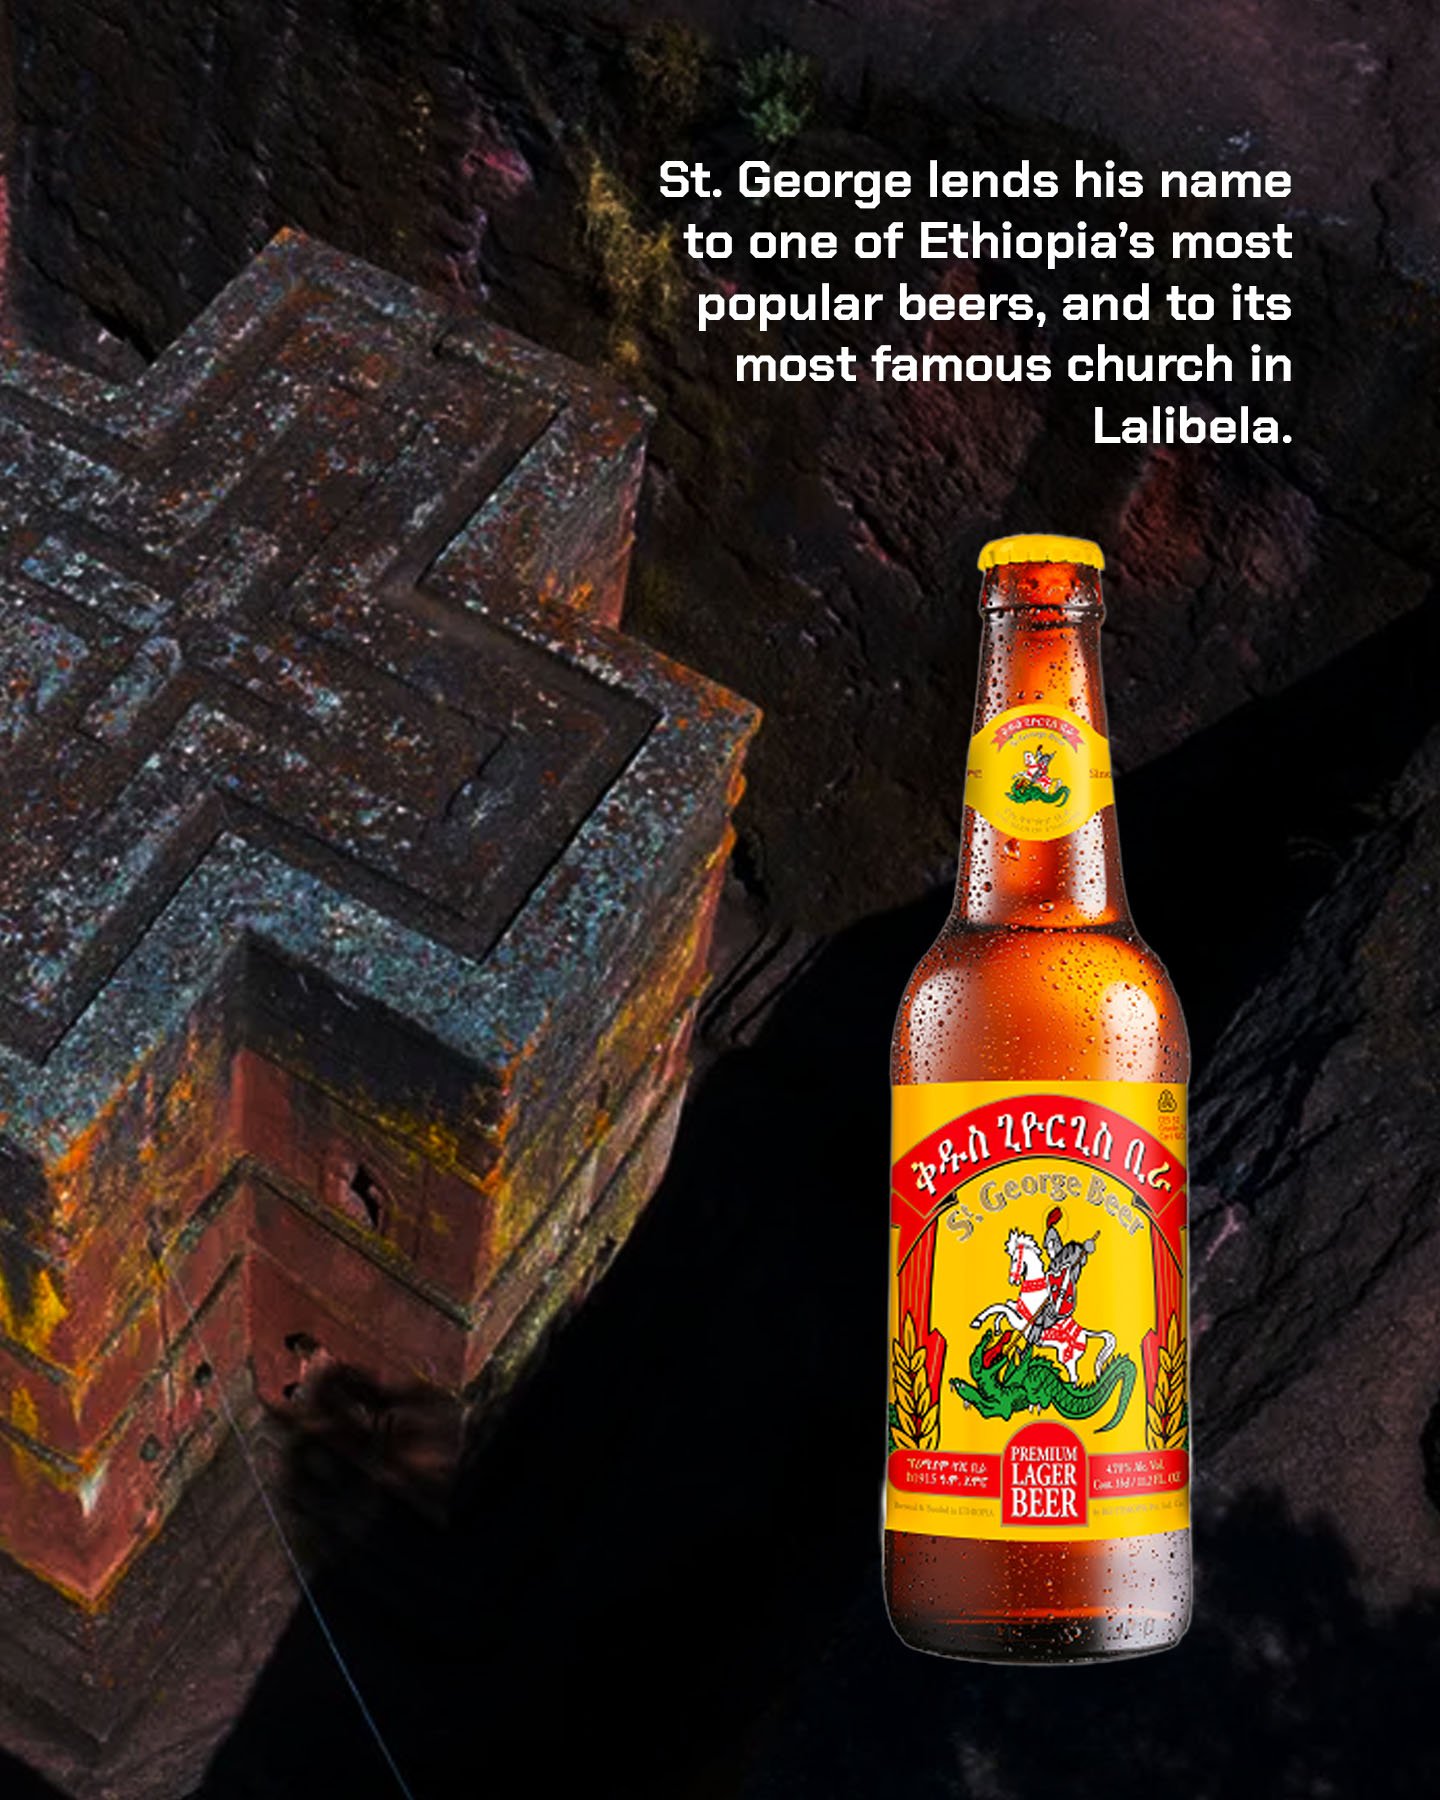 Christianity in Ethiopia 9.jpg